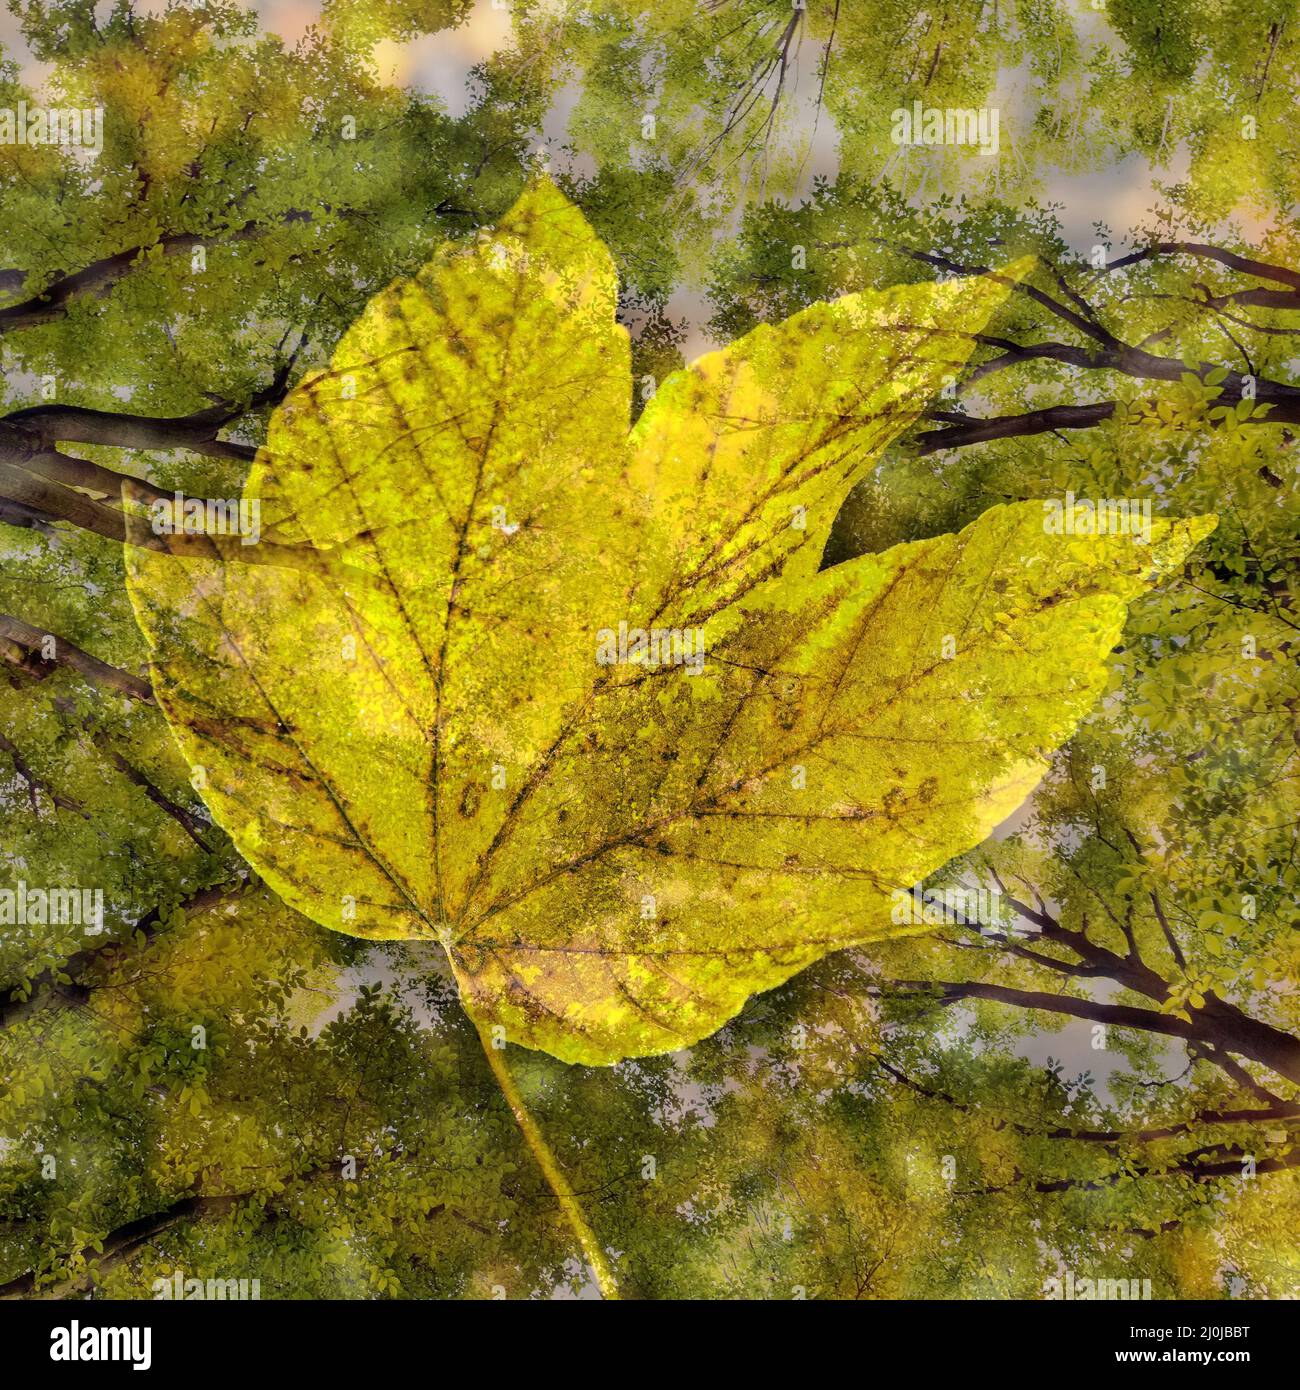 Nature fantasy photo with an autumn leaf and columnar hornbeam (Carpinus betulus), Germany Stock Photo